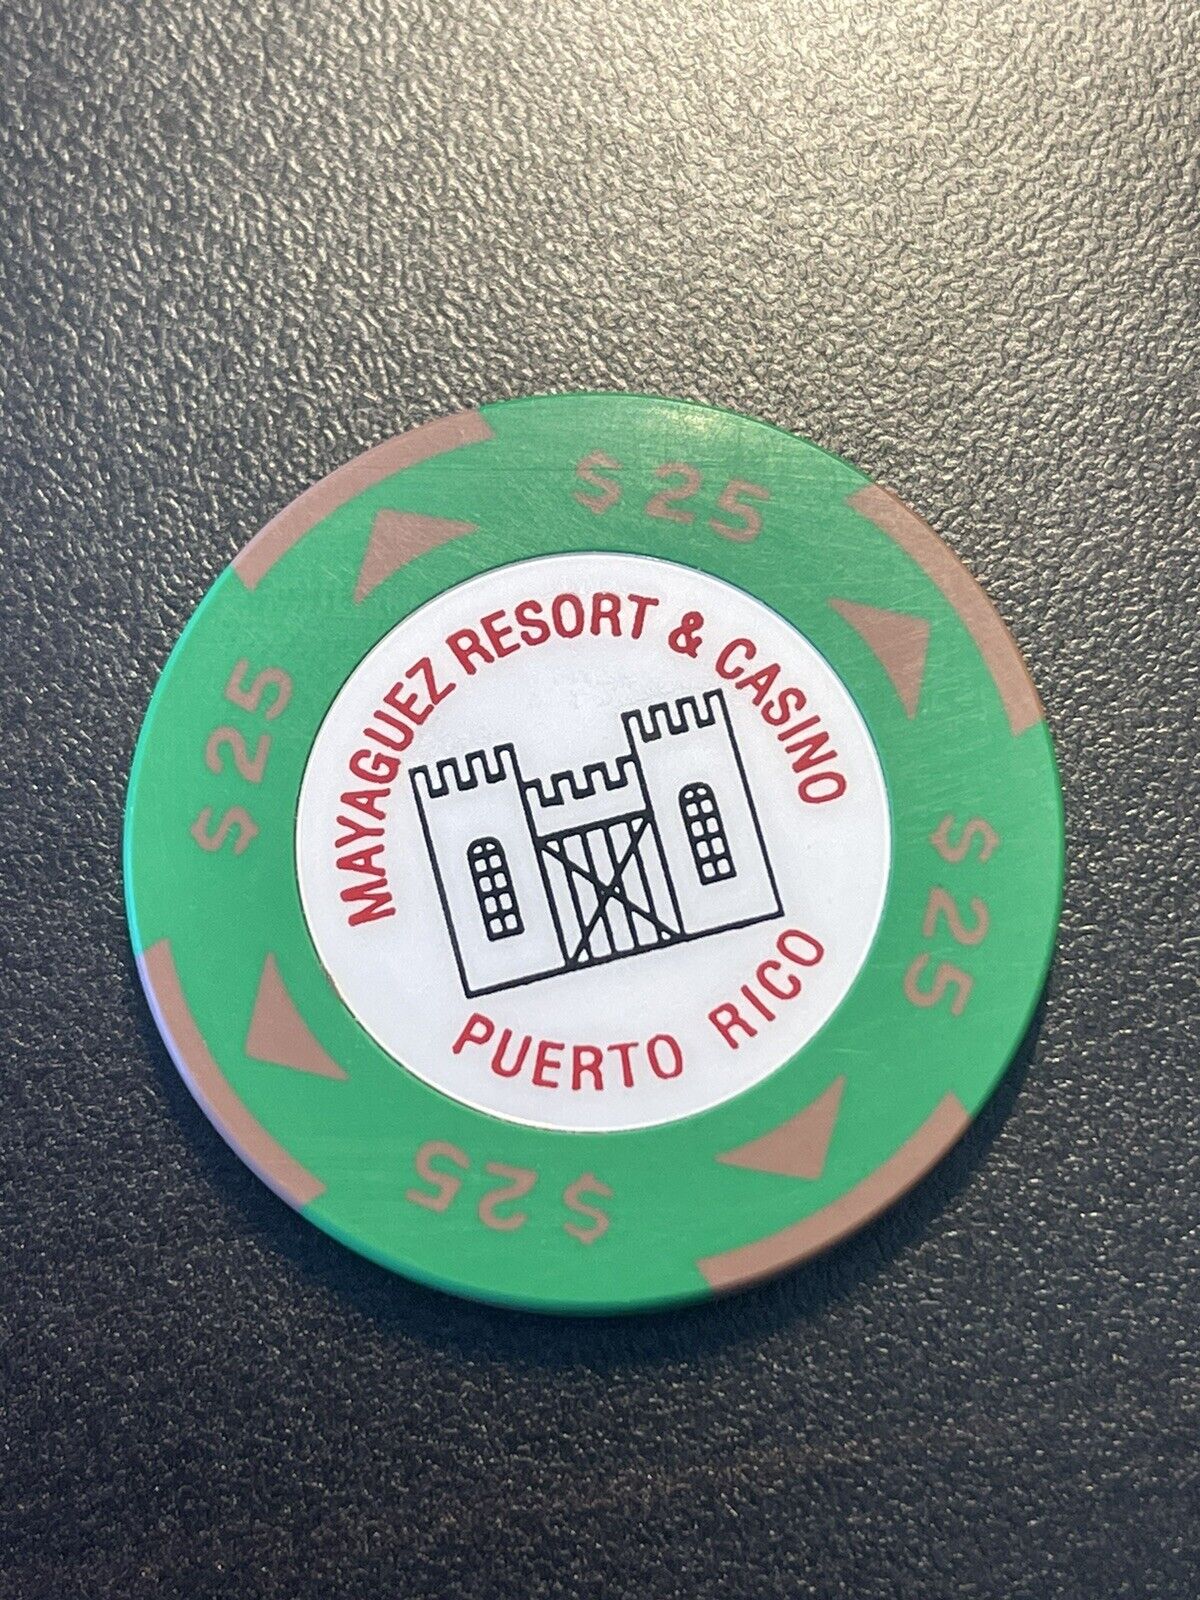 $25 Mayaguez Resort & Casino Puerto Rico Casino Chip  MRC-25a